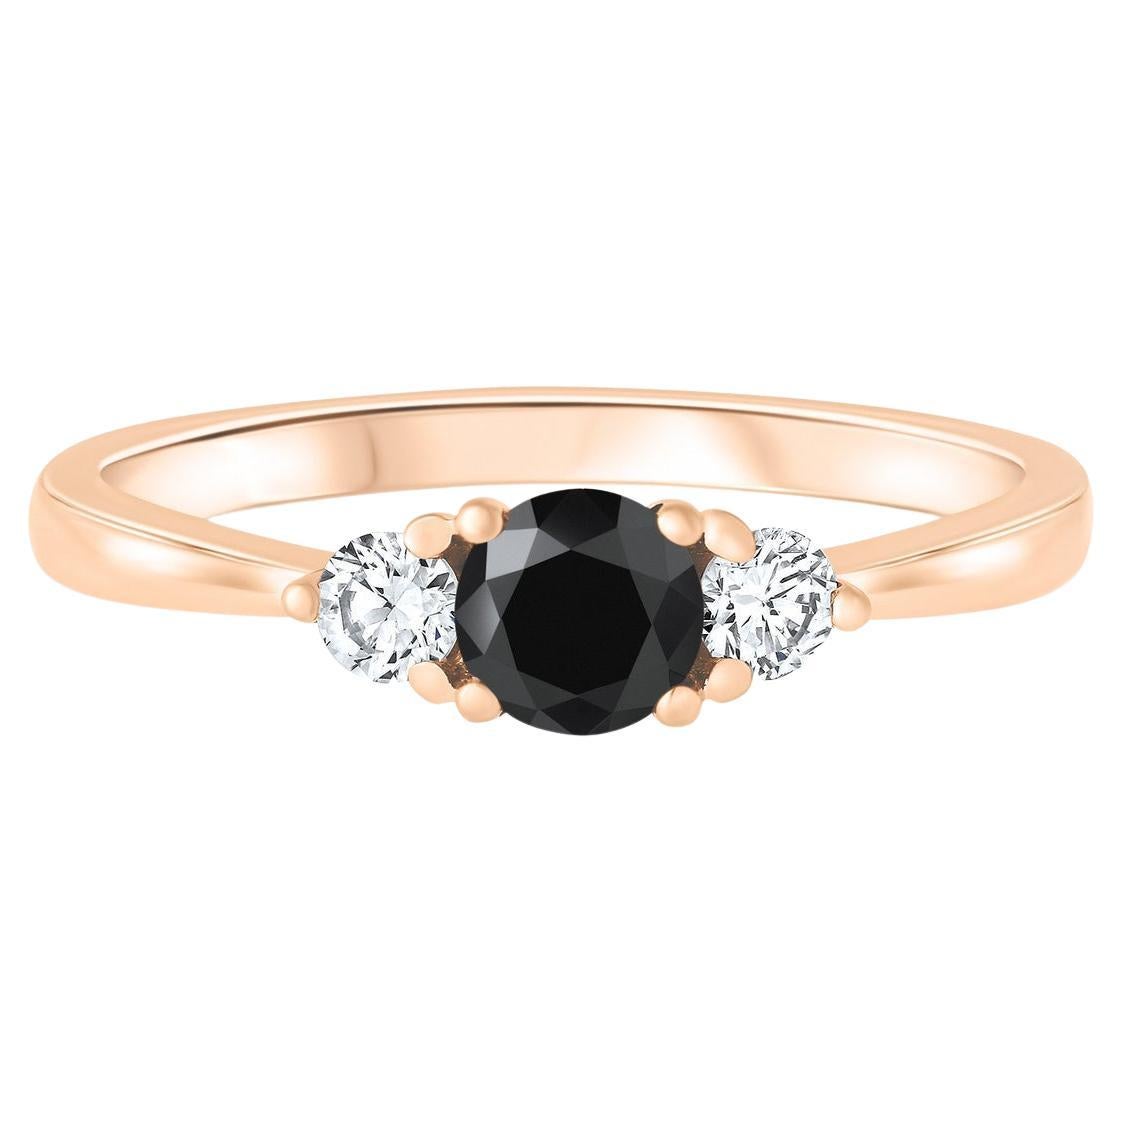 For Sale:  0.40 Carat White and Black Diamond Ring in 14 Karat Rose Gold, Shlomit Rogel